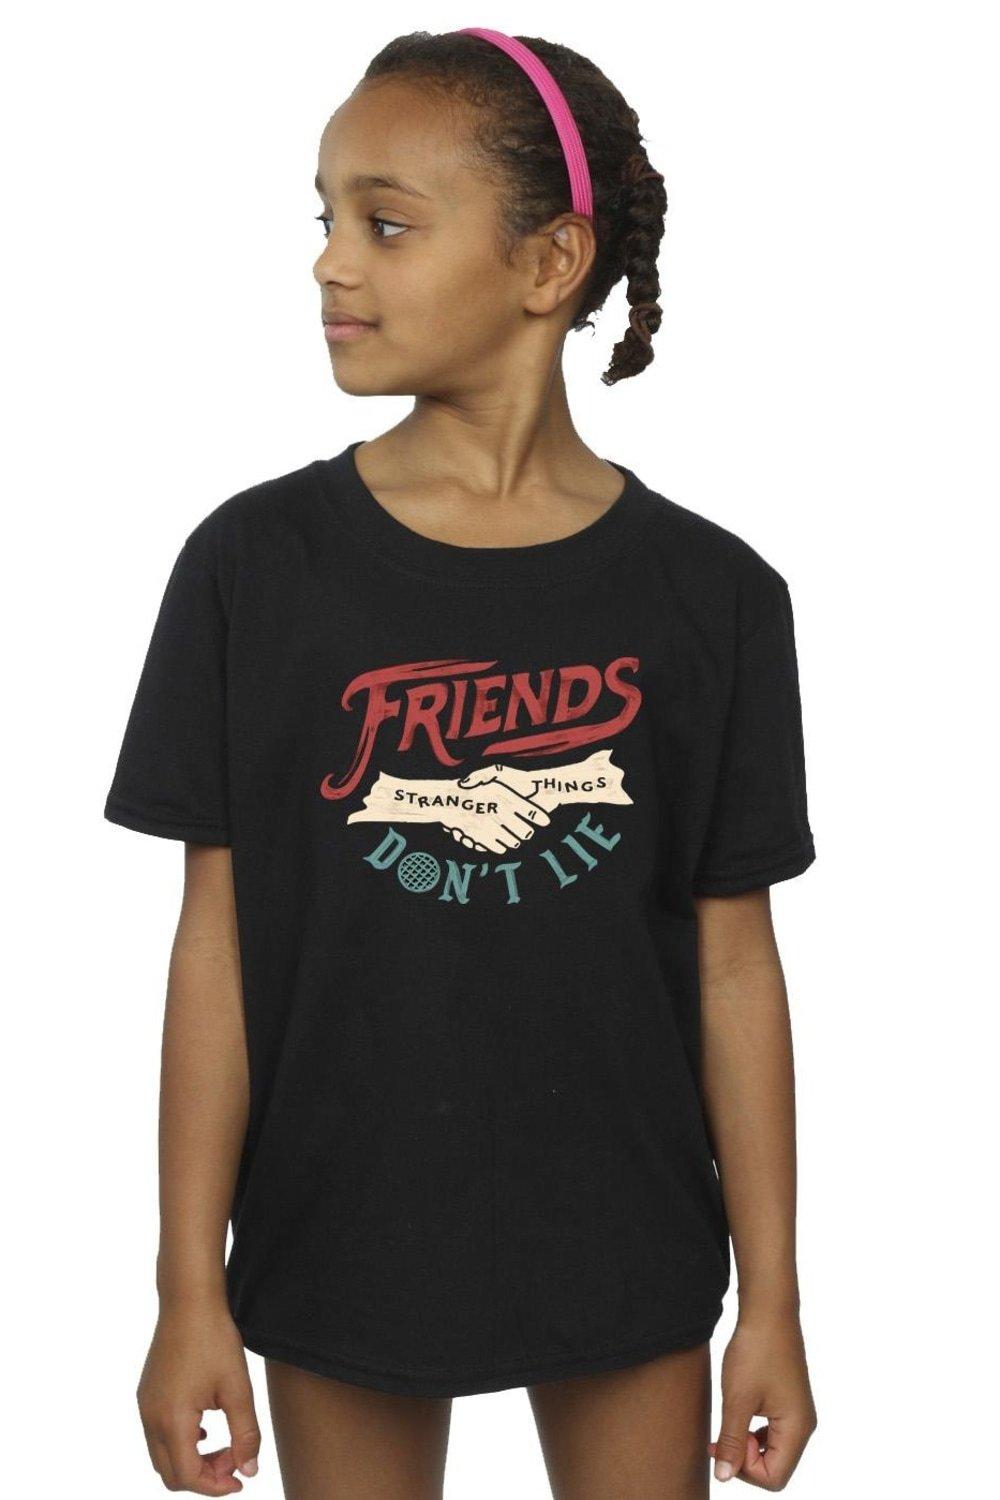 Stranger Things Friends Don’t Lie Hands Cotton T-Shirt